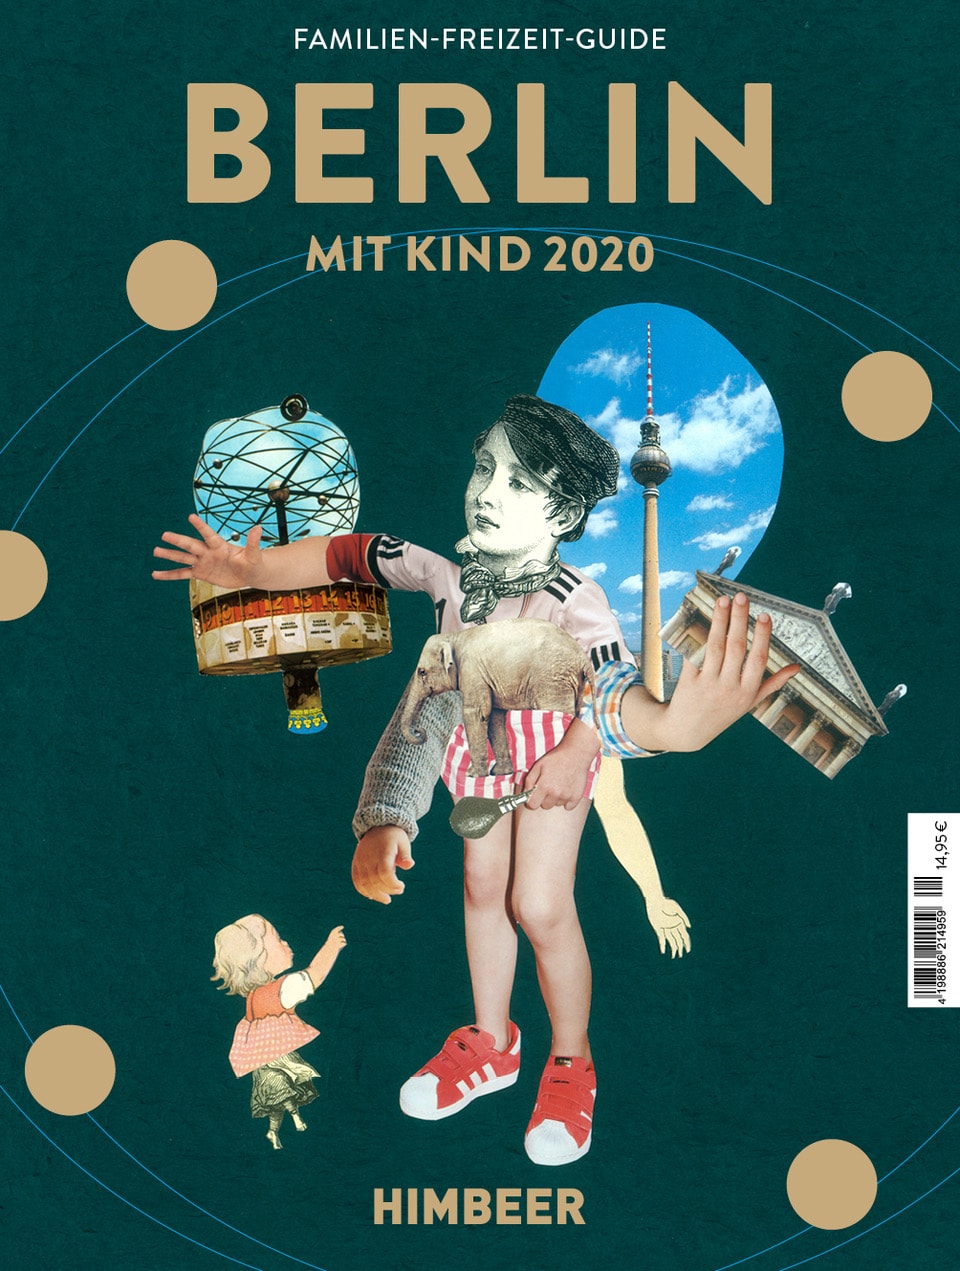 Familien-Freizeit-Guide Berlin Mit Kind 2020 // Himbeer